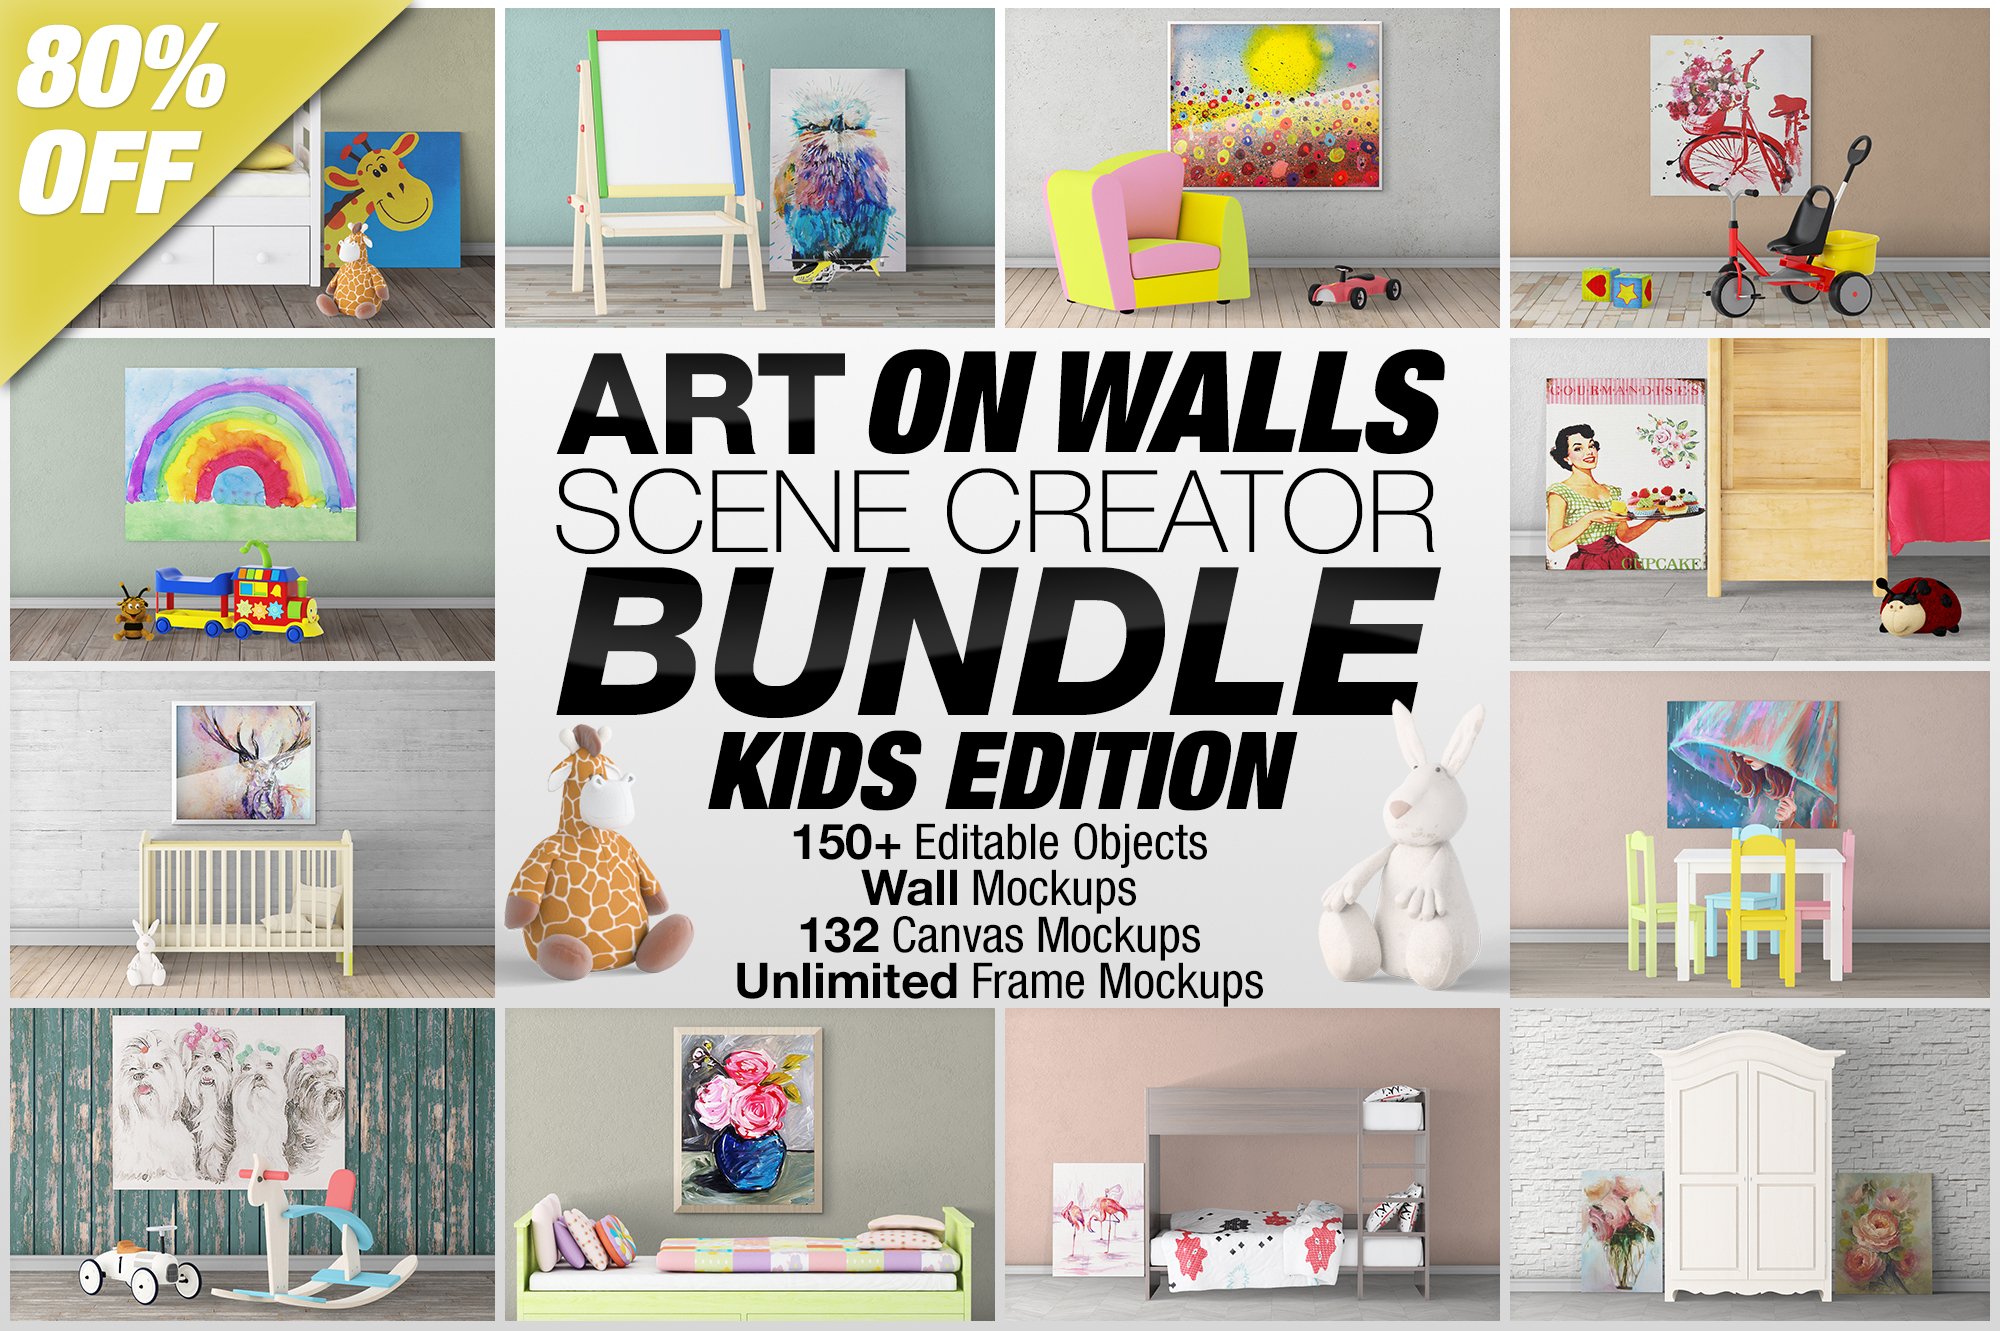 Art On Walls Scene Creator Bundle V3 cover image.